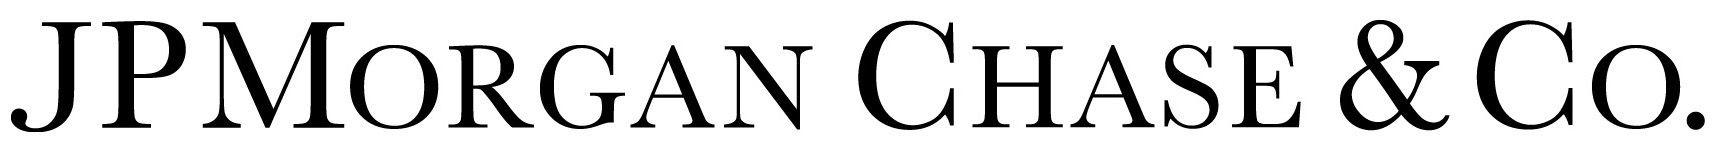 JPMorgan Chase Logo - JPMC 2015 Definitive Proxy Statement